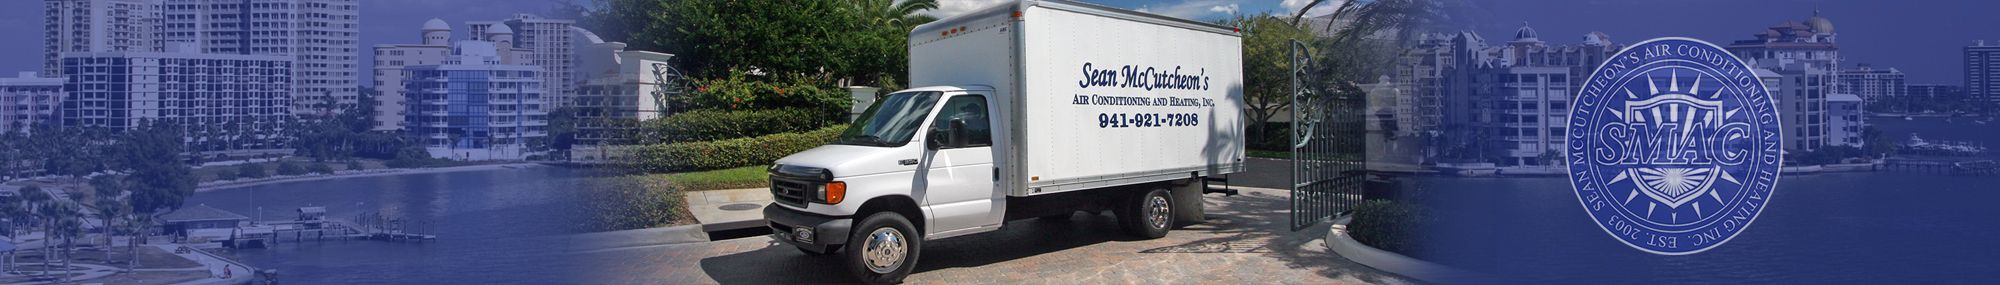 Sean McCutcheon’s Air Conditioning maintenance - Sarasota Florida